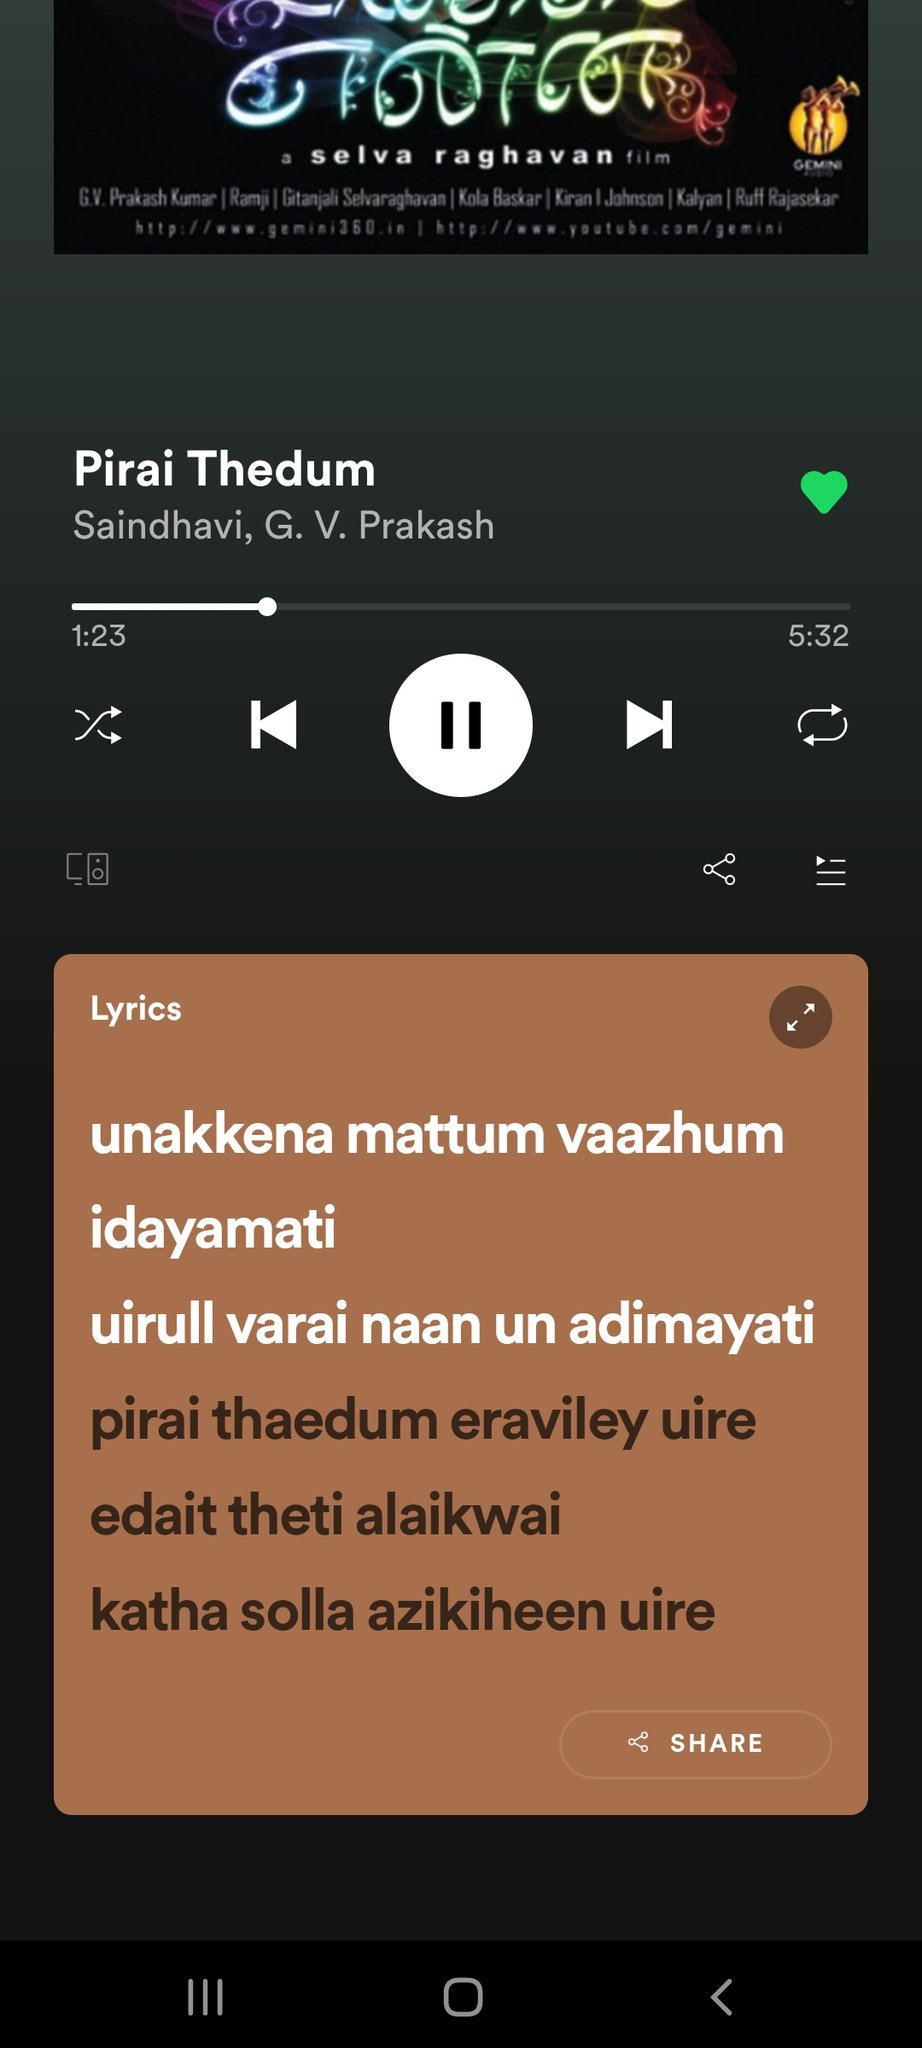 Pirai thedum lyrics